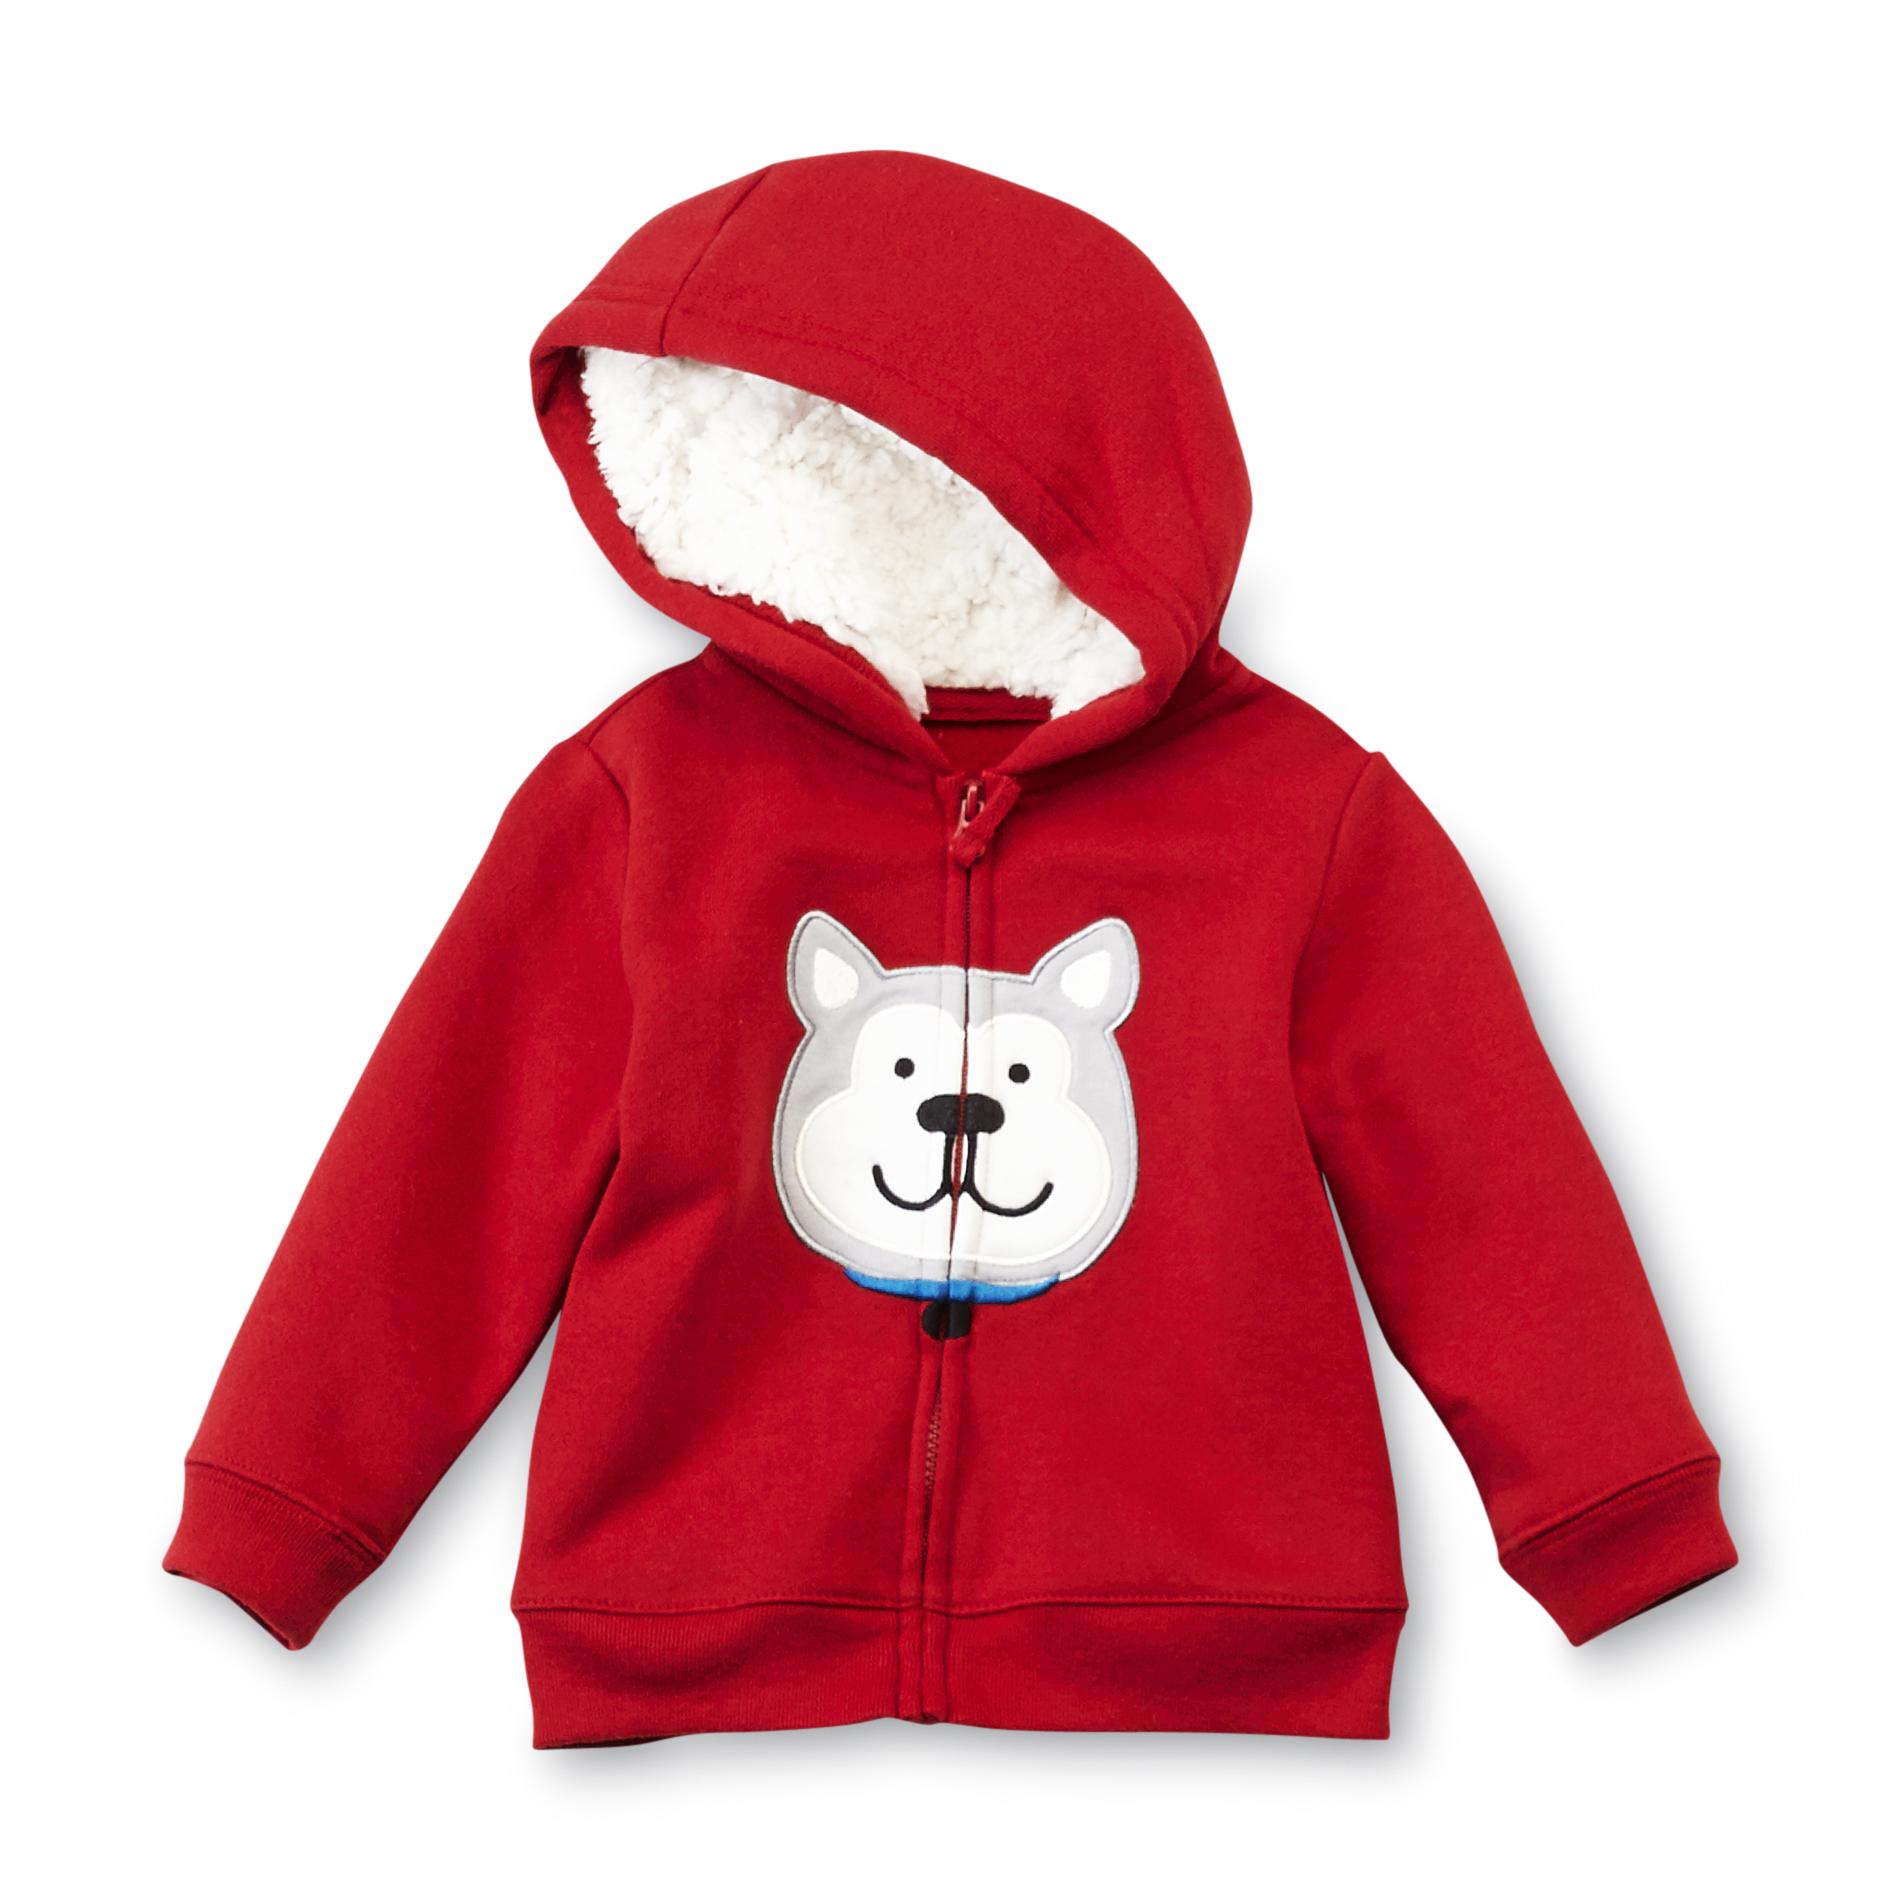 Little Wonders Newborn & Infant Boy's Hoodie Jacket - Dog